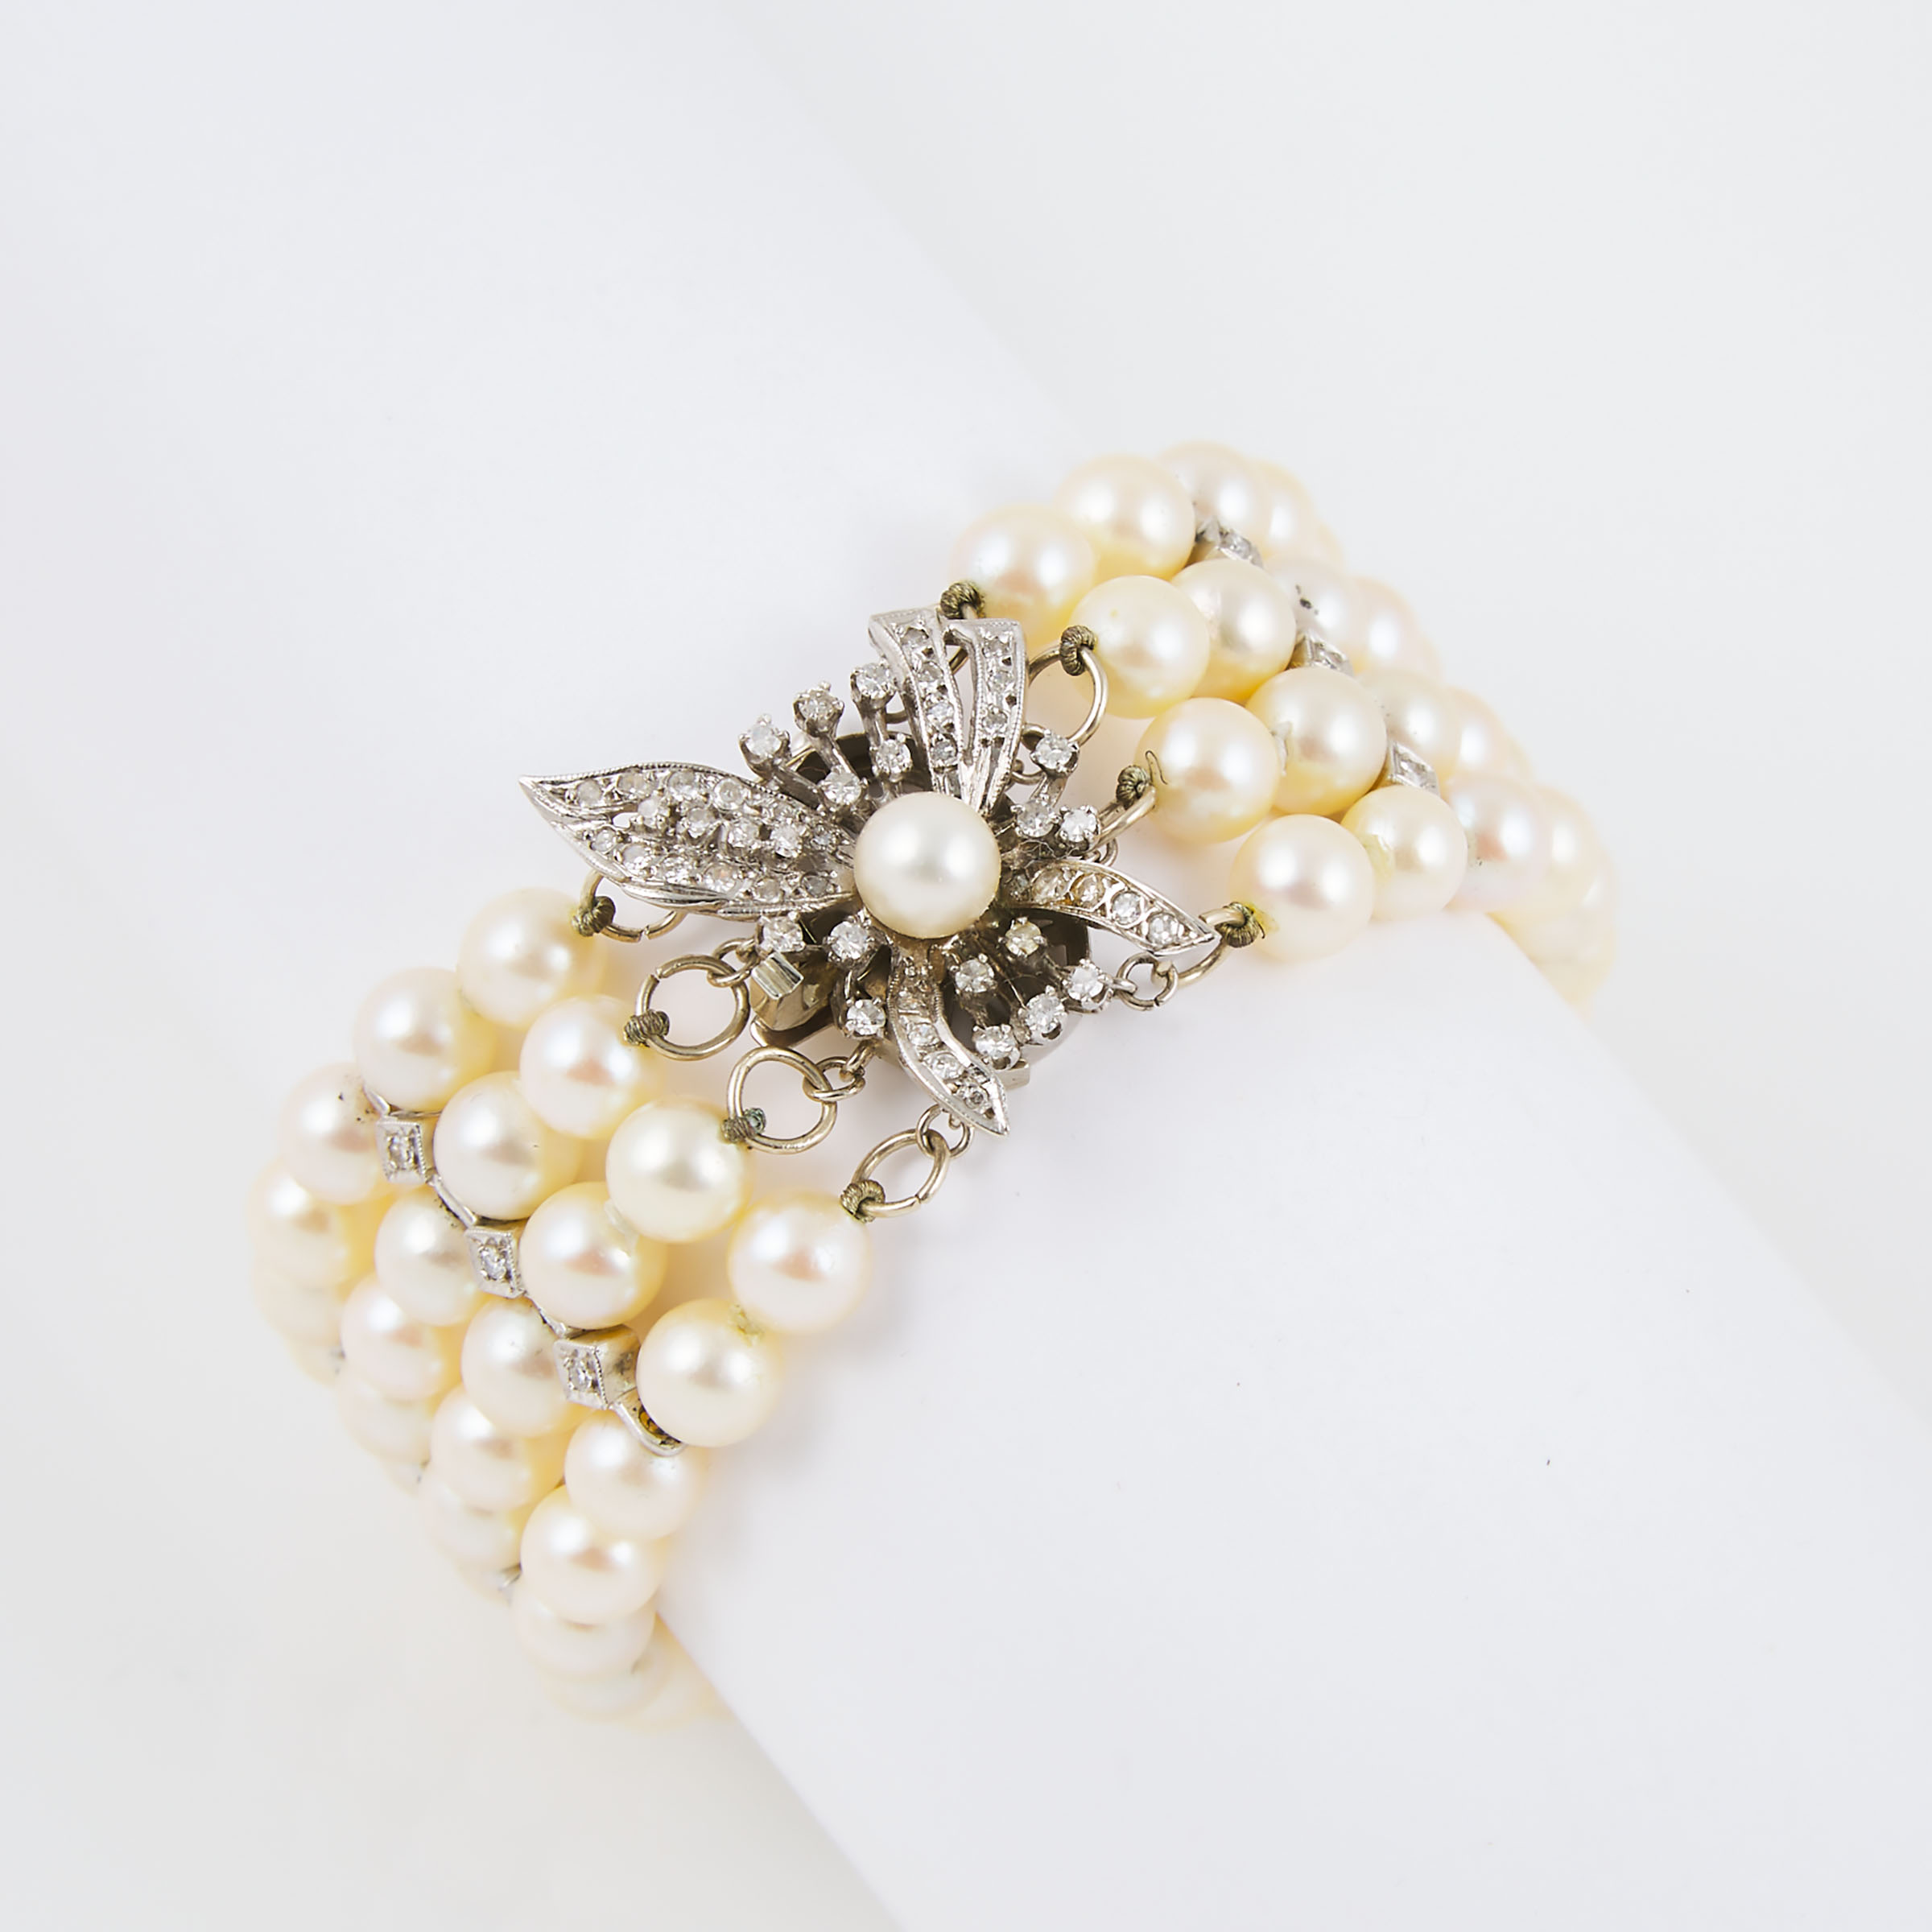 10k And 14K White Gold 4-Strand Cultured Pearl Bracelet